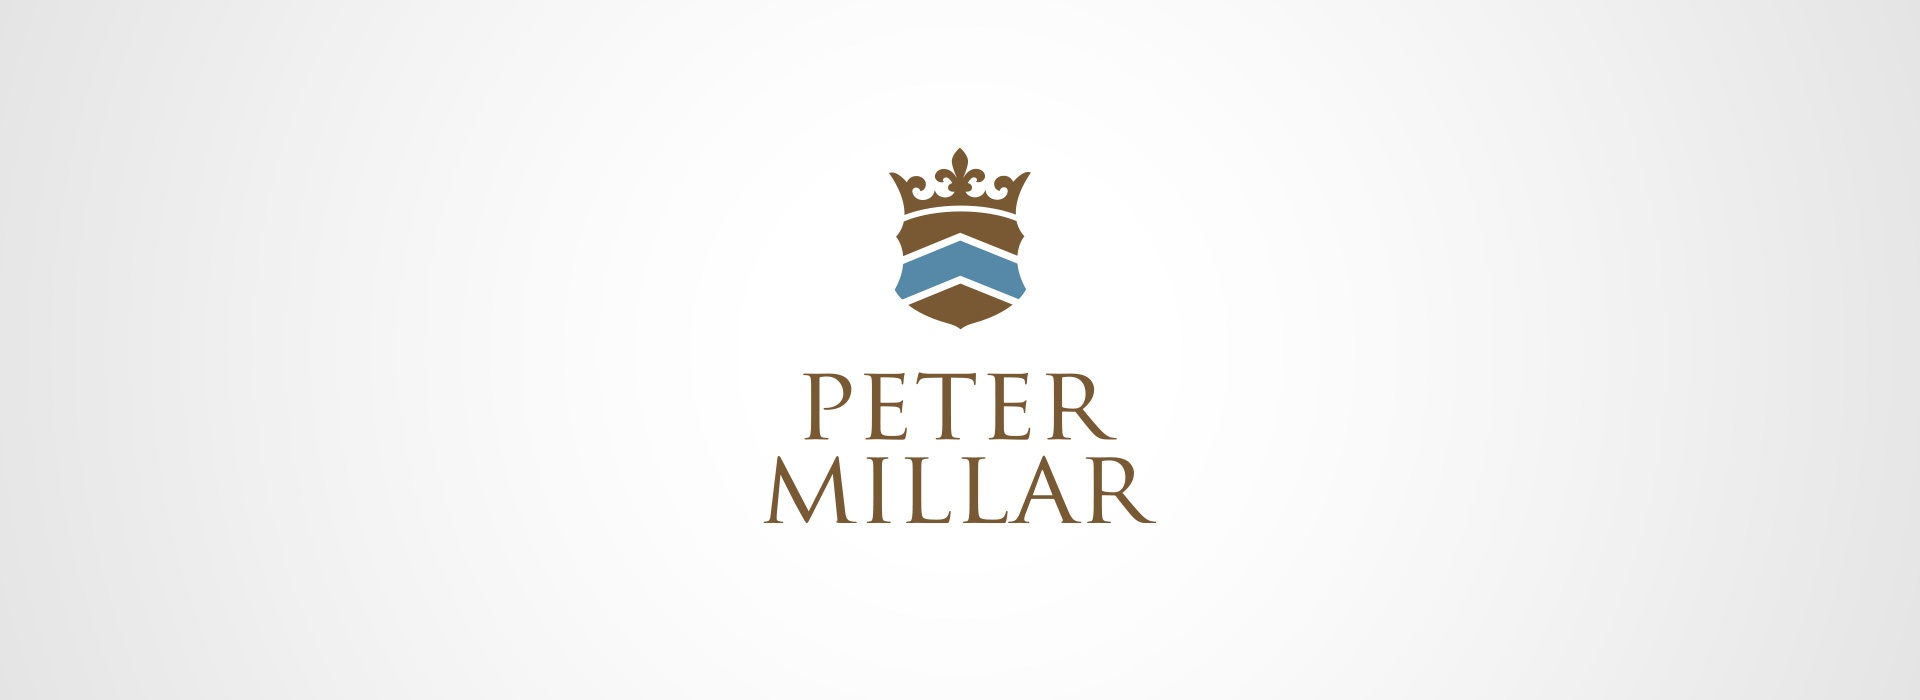 Peter Millar Logo Polo - Peter Millar The Fox Club Embroidered Logo ...